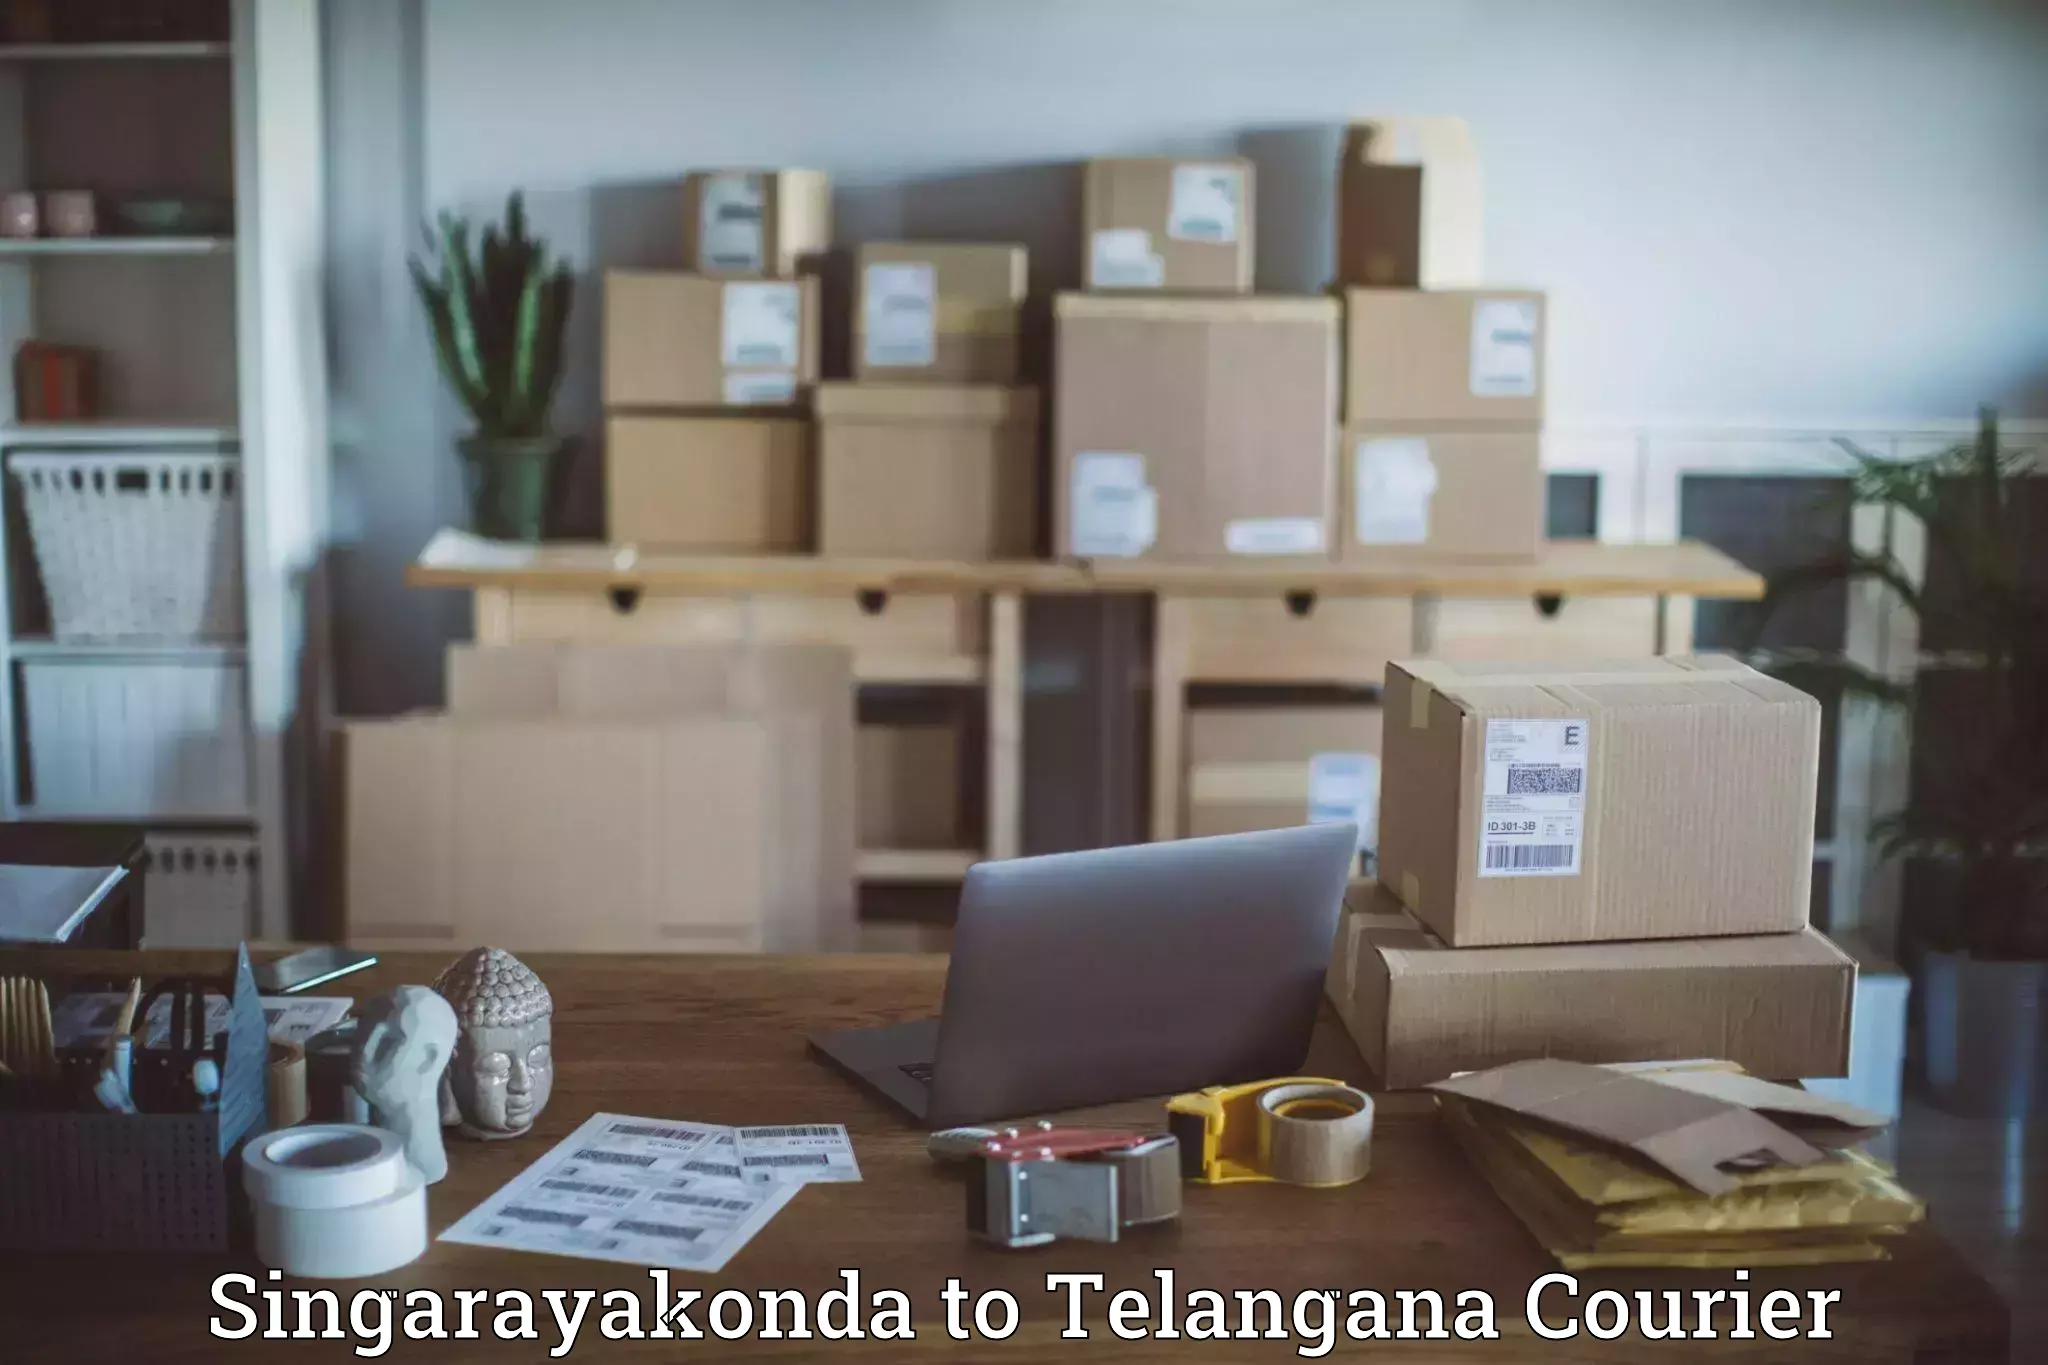 Efficient parcel service Singarayakonda to Manuguru